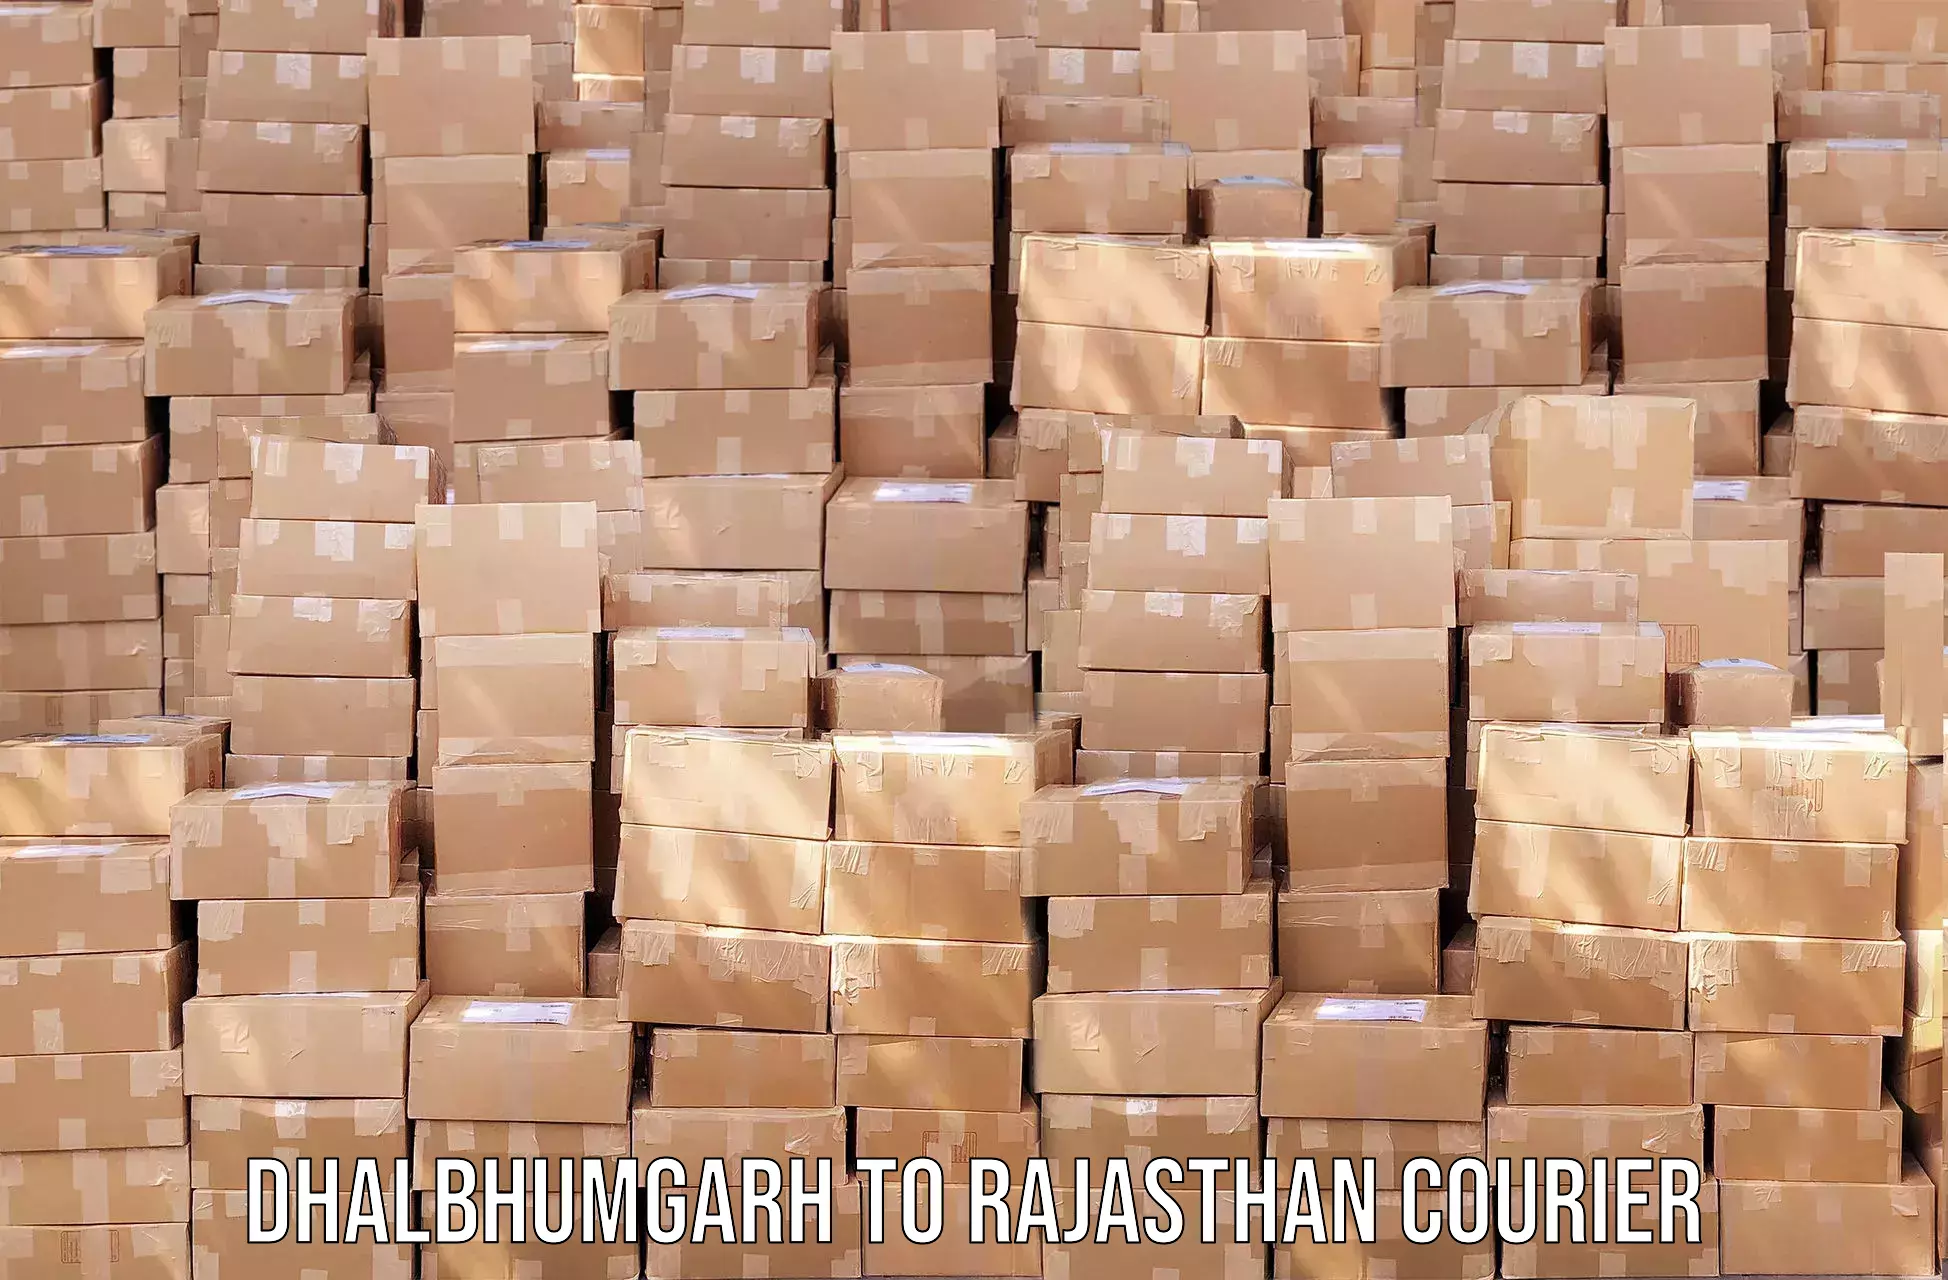 Courier service comparison Dhalbhumgarh to Sawai Madhopur